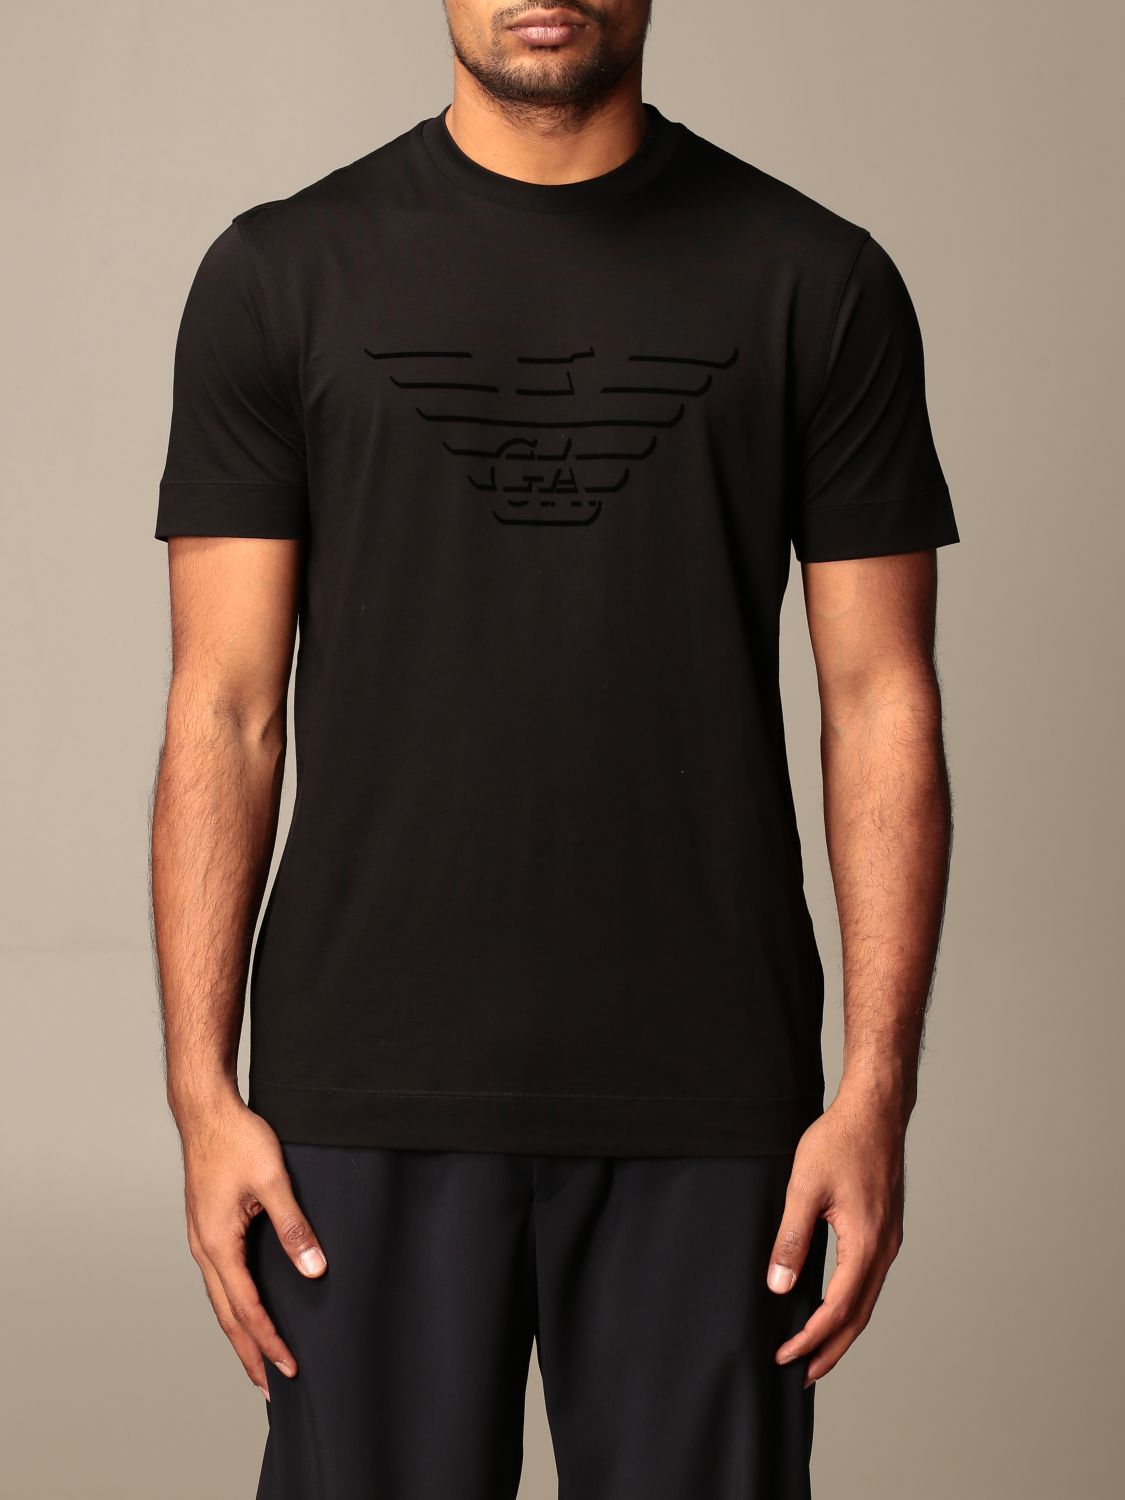 EMPORIO ARMANI: cotton t-shirt with flock logo - Black | Emporio Armani ...